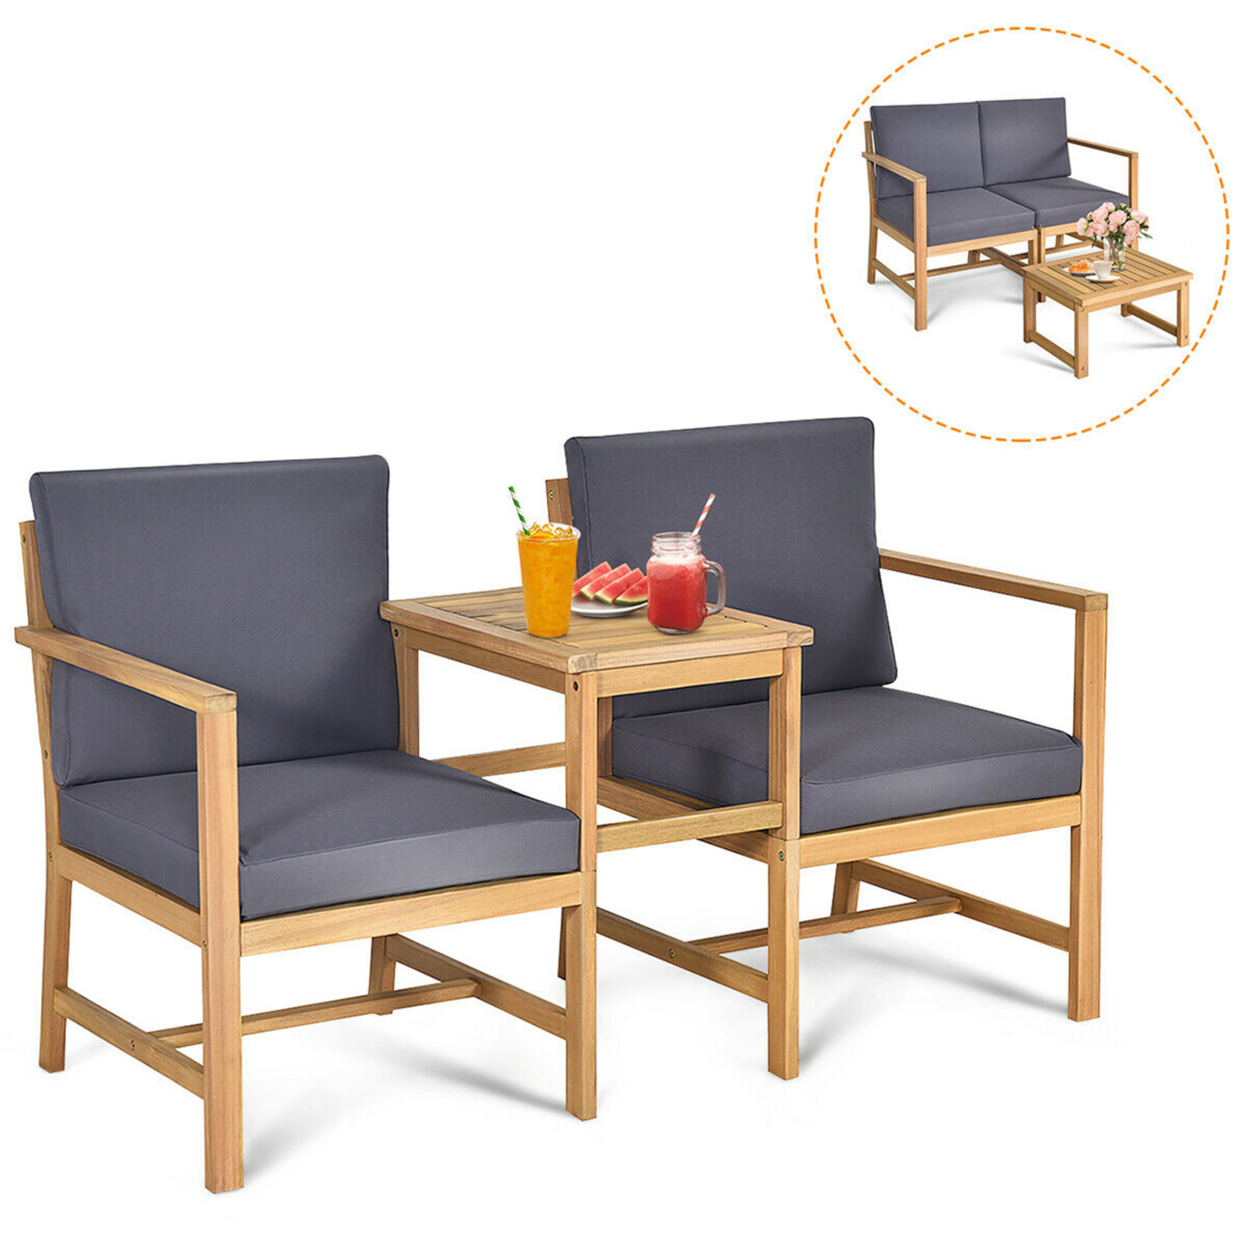 3 In 1 Acacia Wood Furniture Set Patio Outdoor W/ Cushion Coffee Table